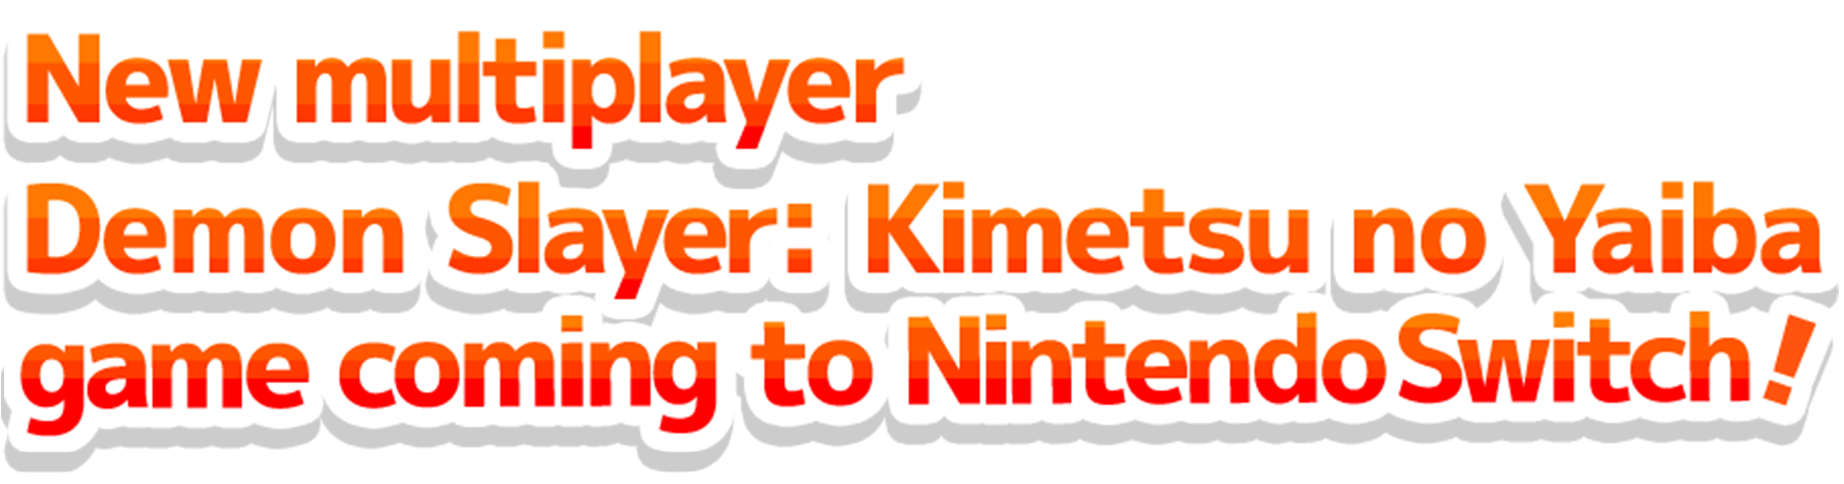 New multiplayer Demon Slayer: Kimetsu no Yaiba game coming to Nintendo Switch!